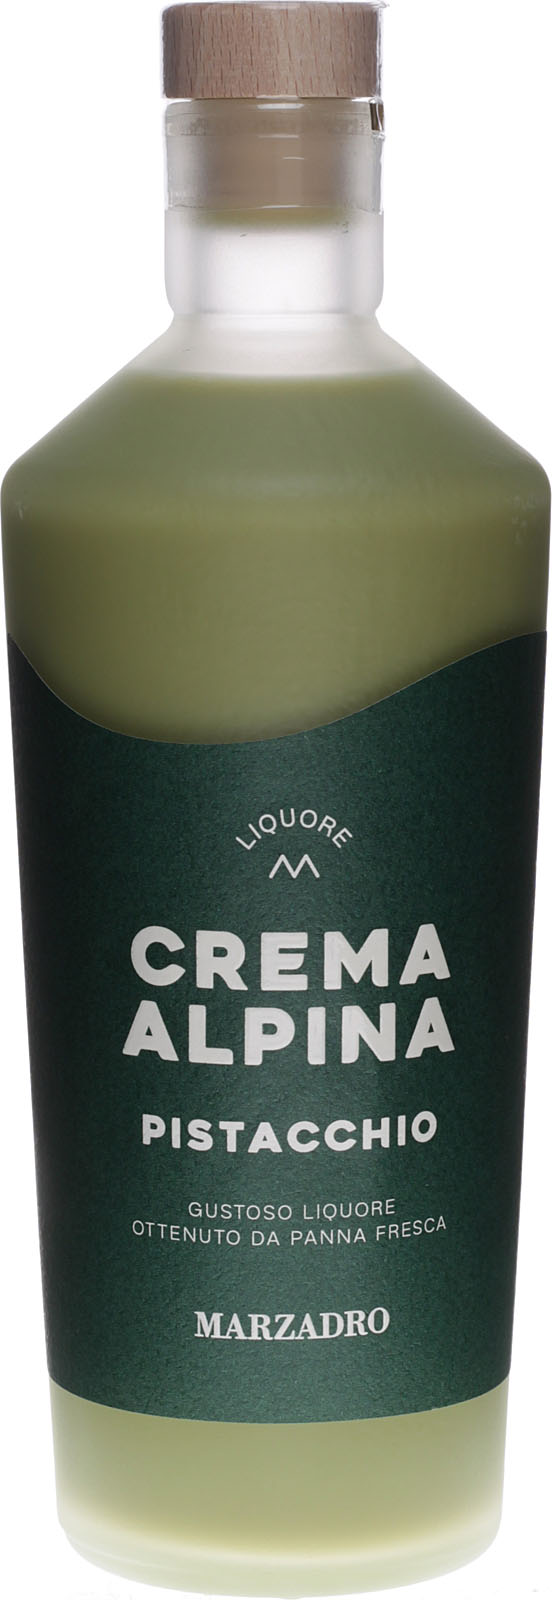 Marzadro Crema Alpina Pistacchio bei uns 0,7 Liter kauf